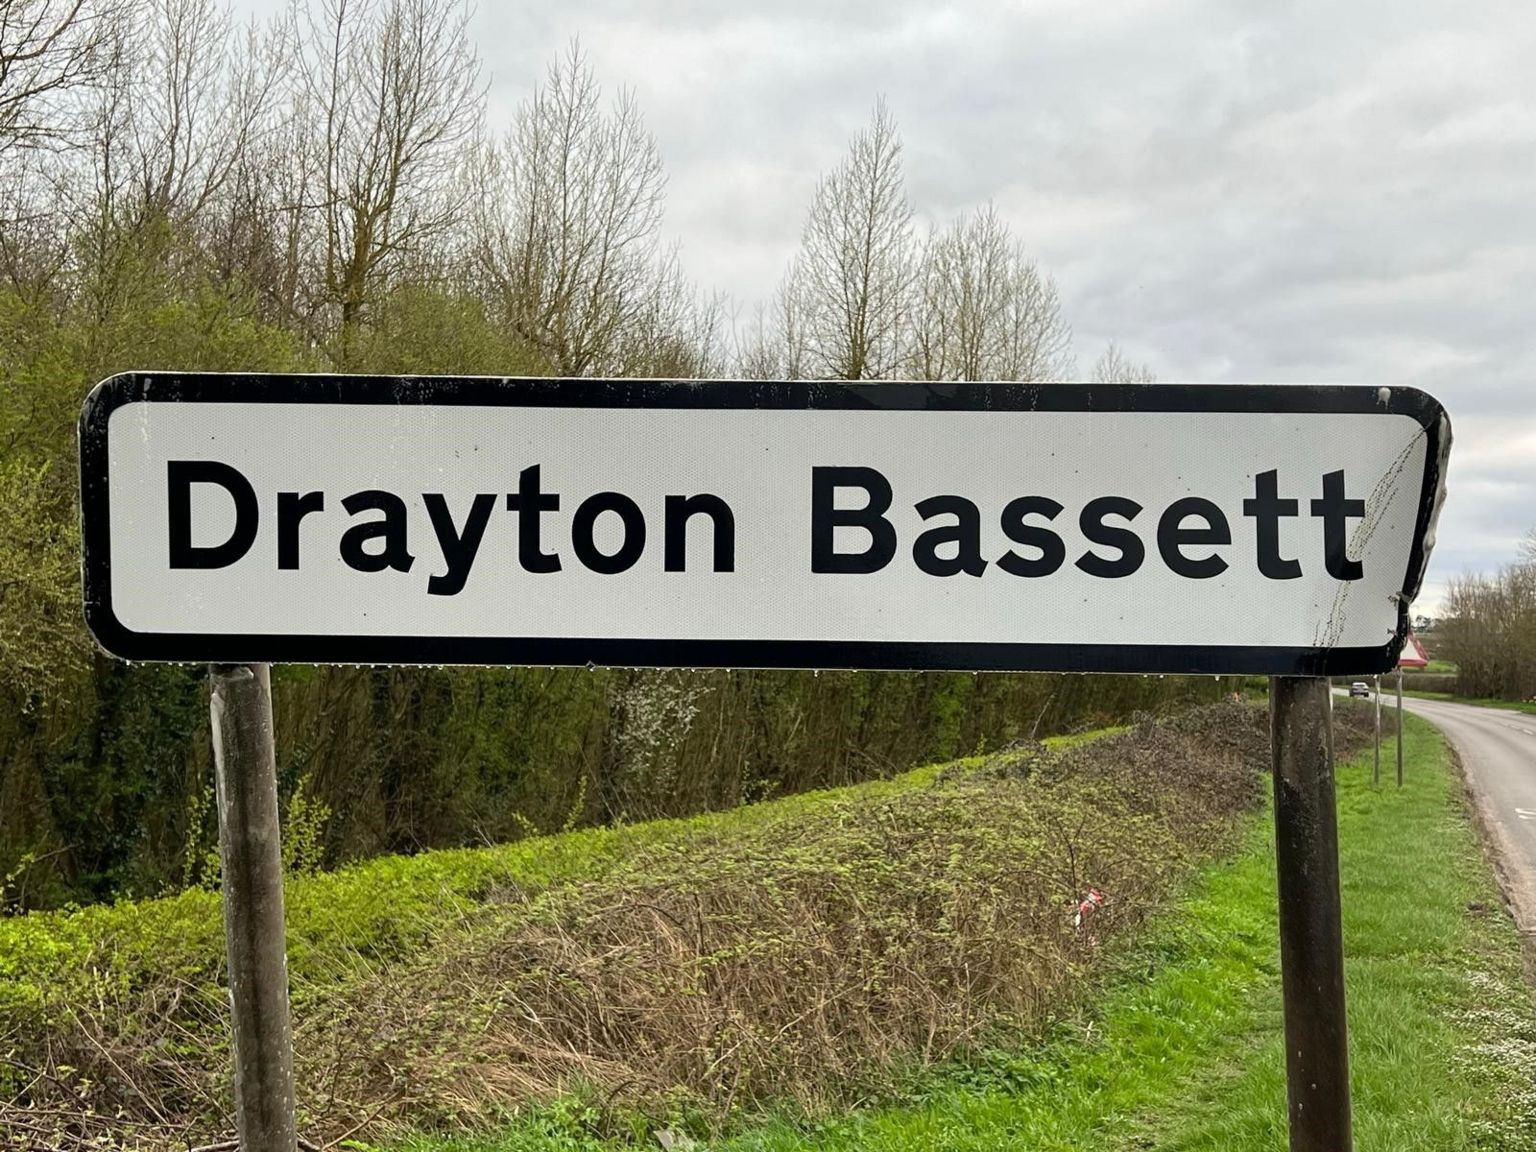 The clean Drayton Bassett sign